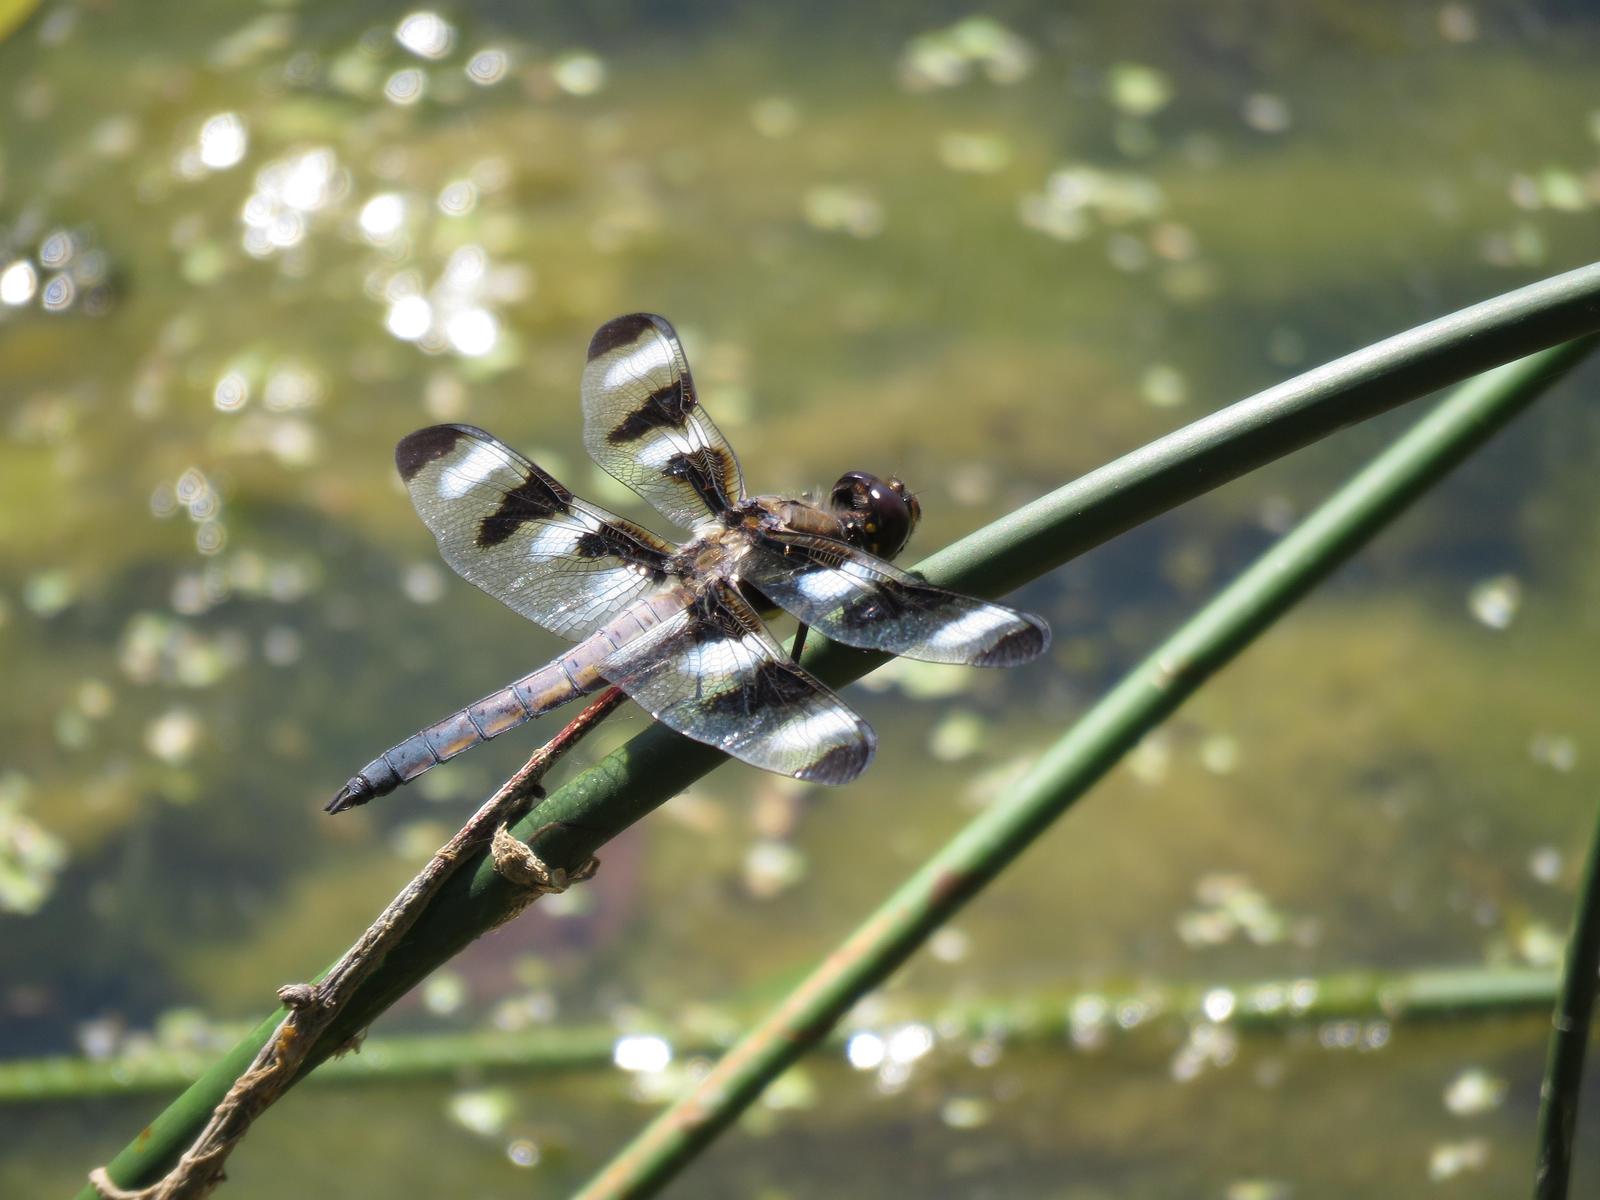 Twelve-spotted Skimmer Photo by Kelly Preheim